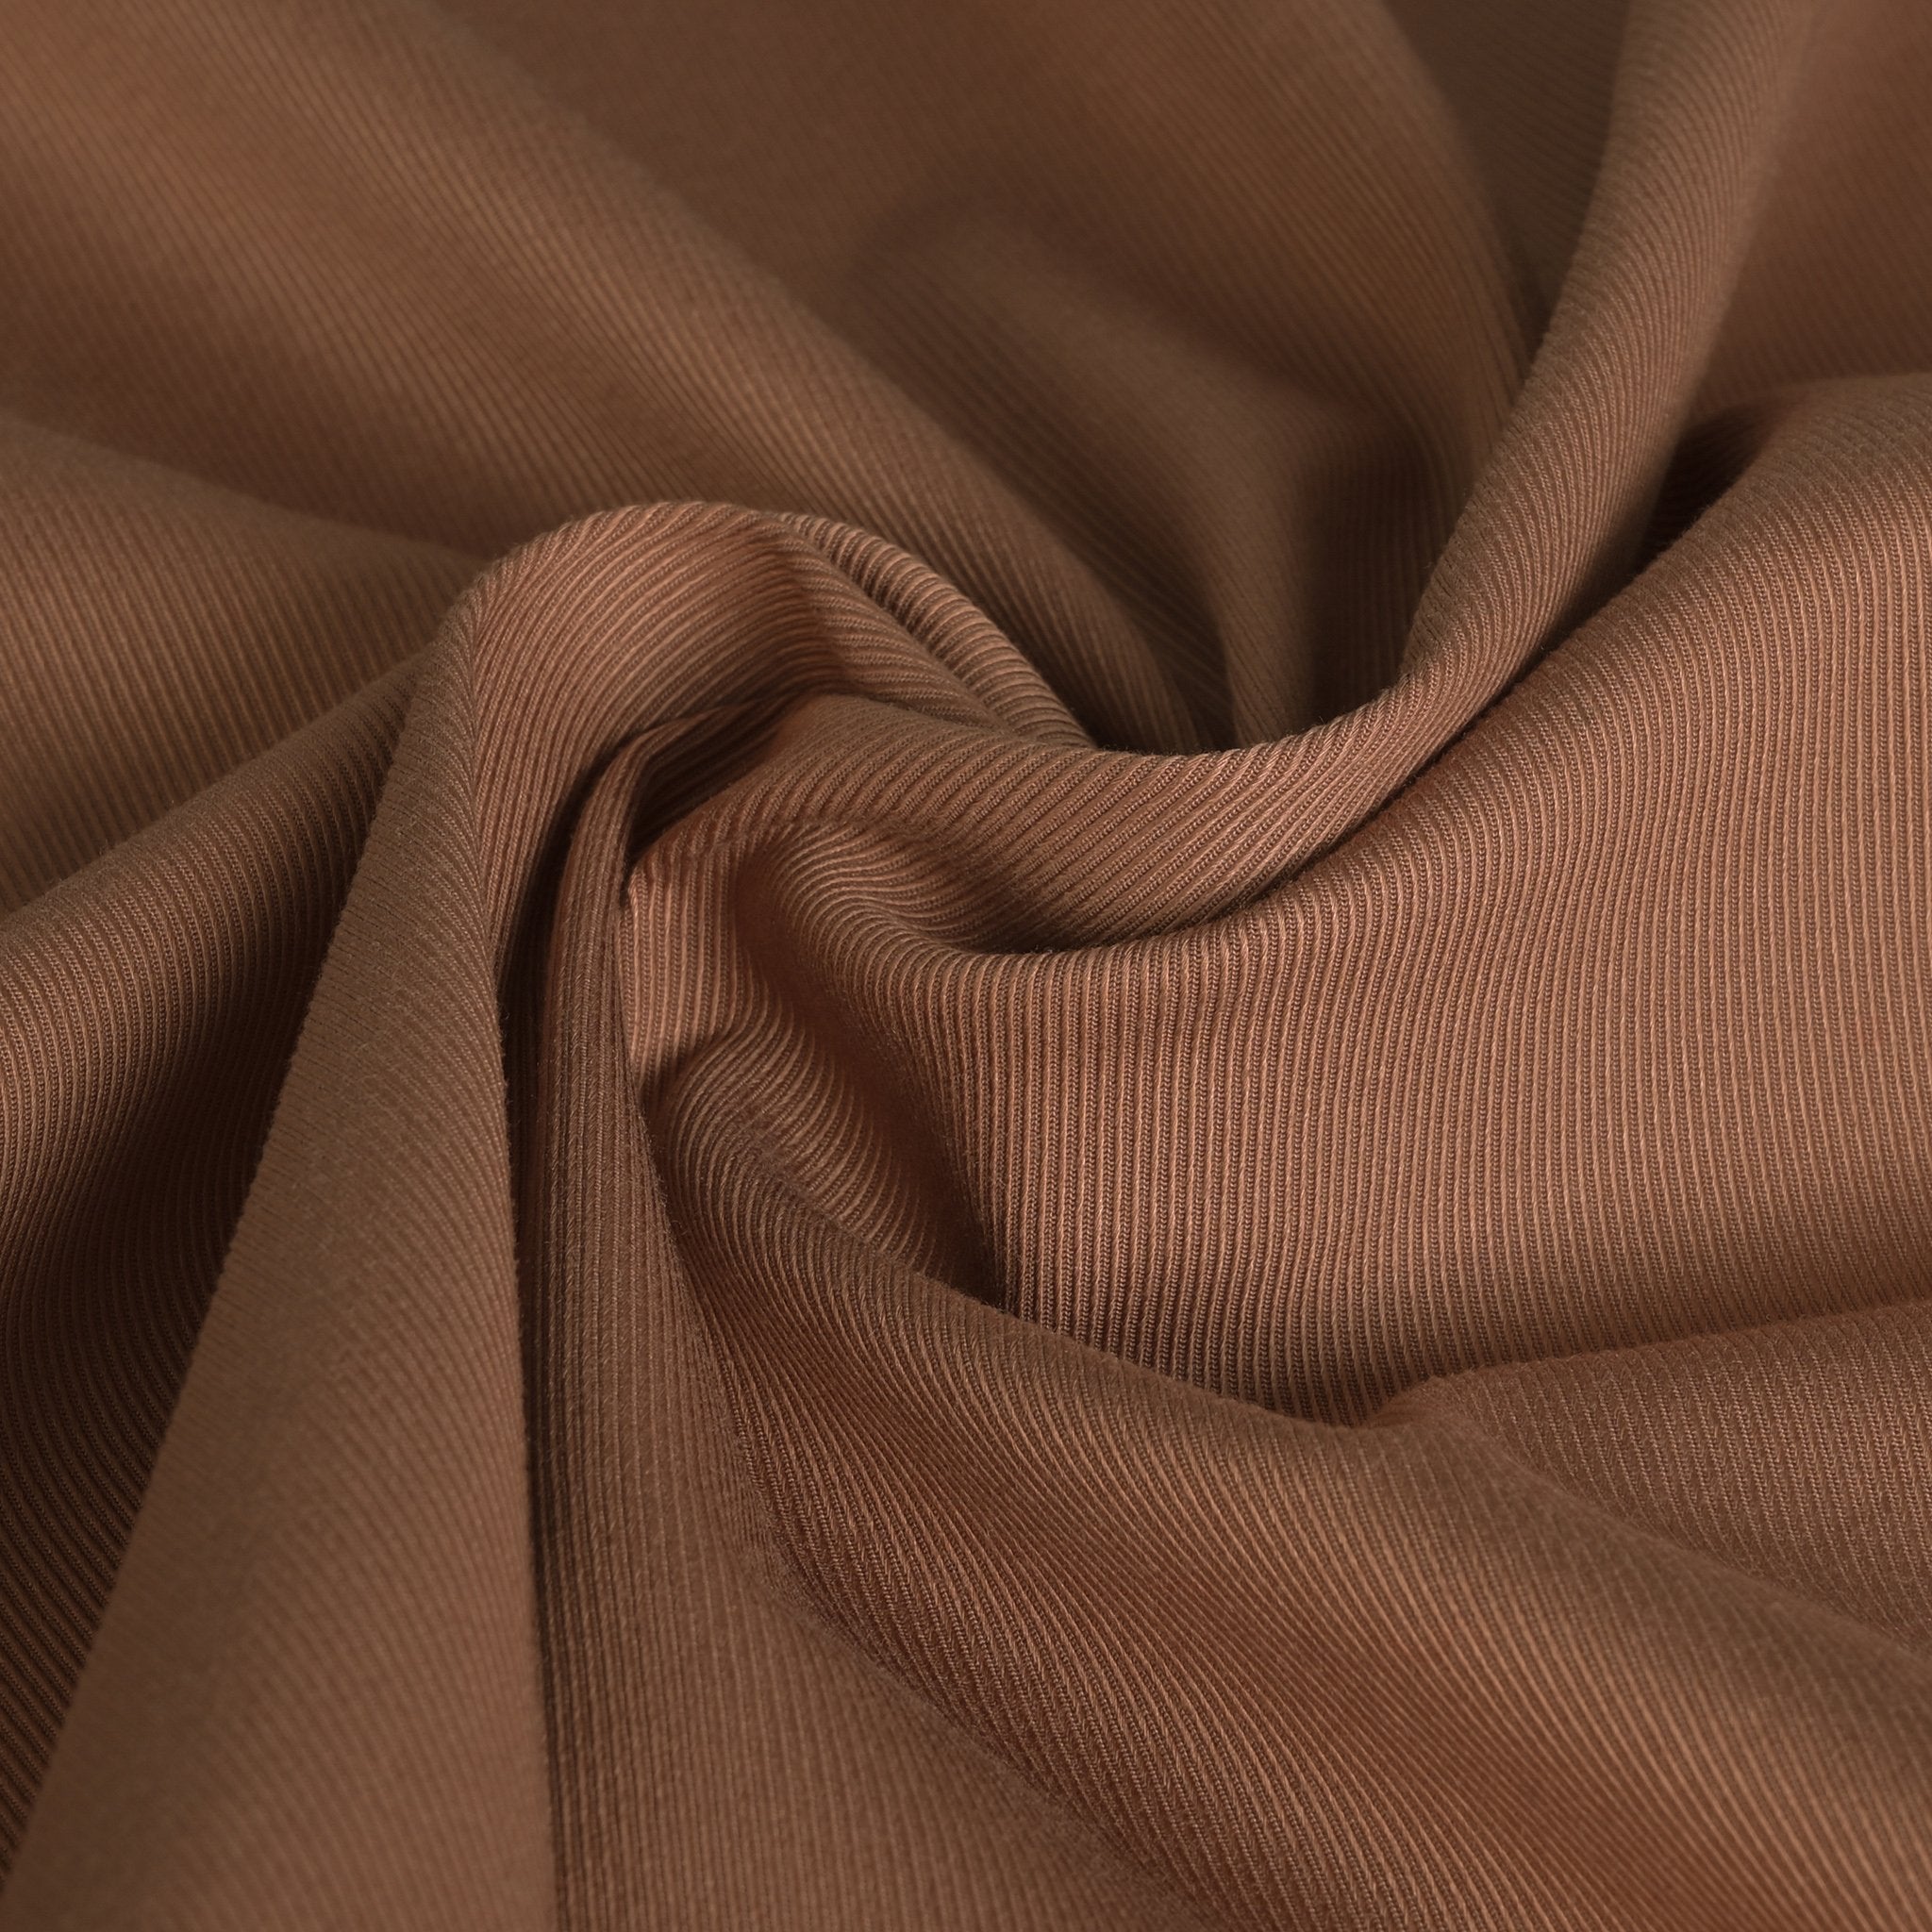 Brown Stretchy Twill Fabric 5688